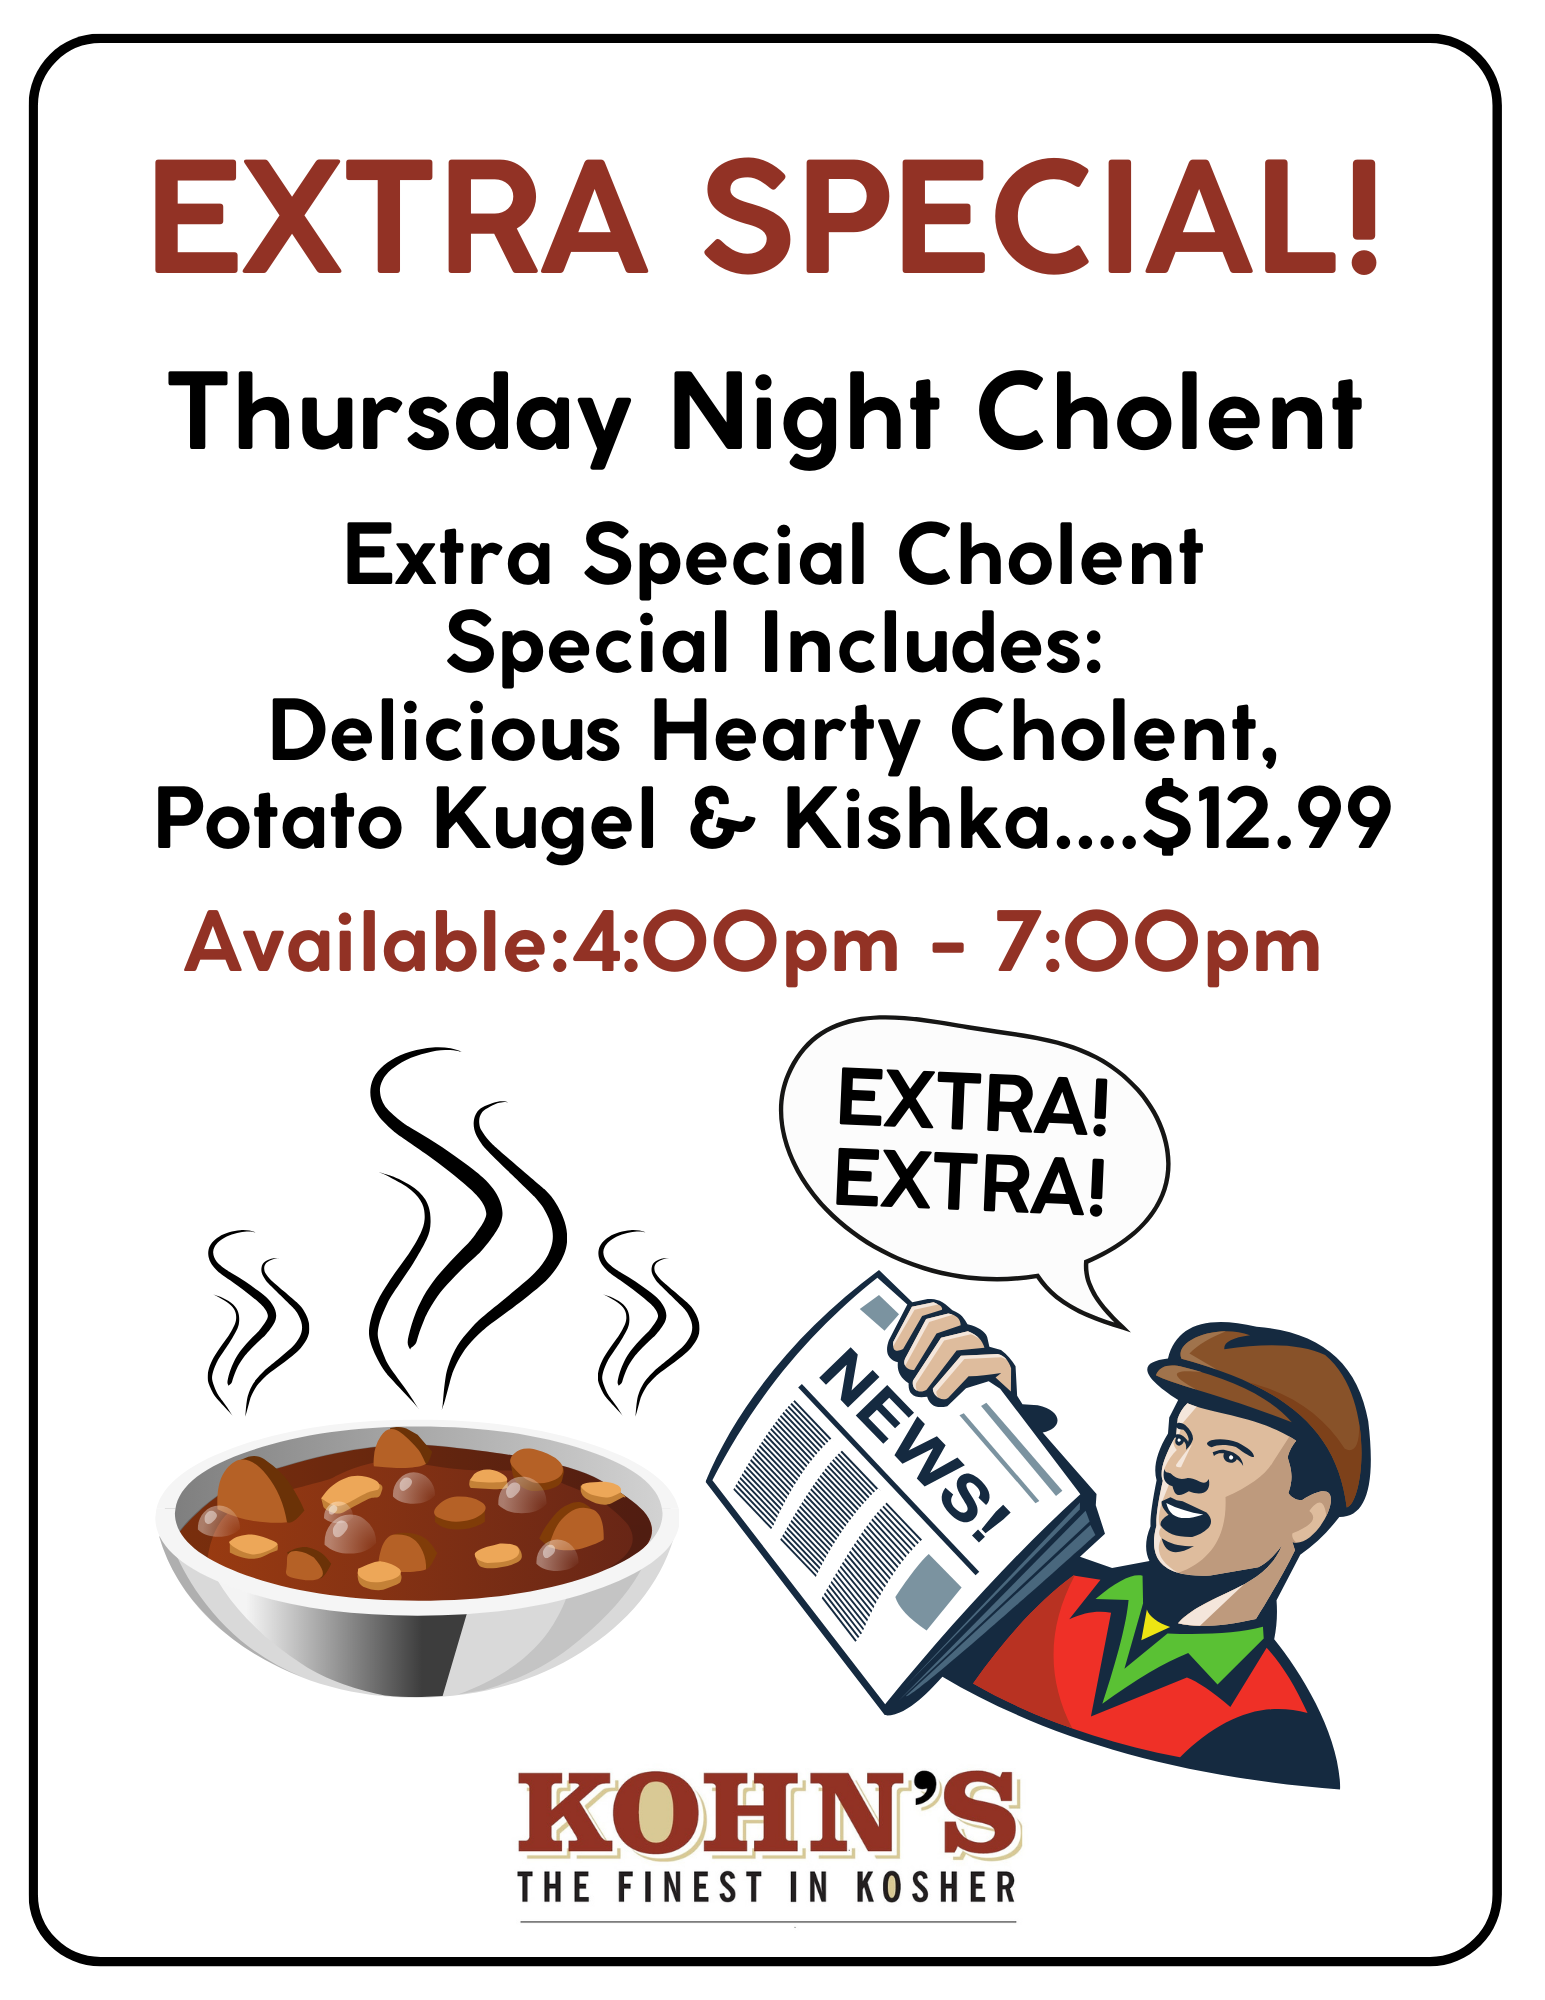 Extra Special Thursday Night Cholent